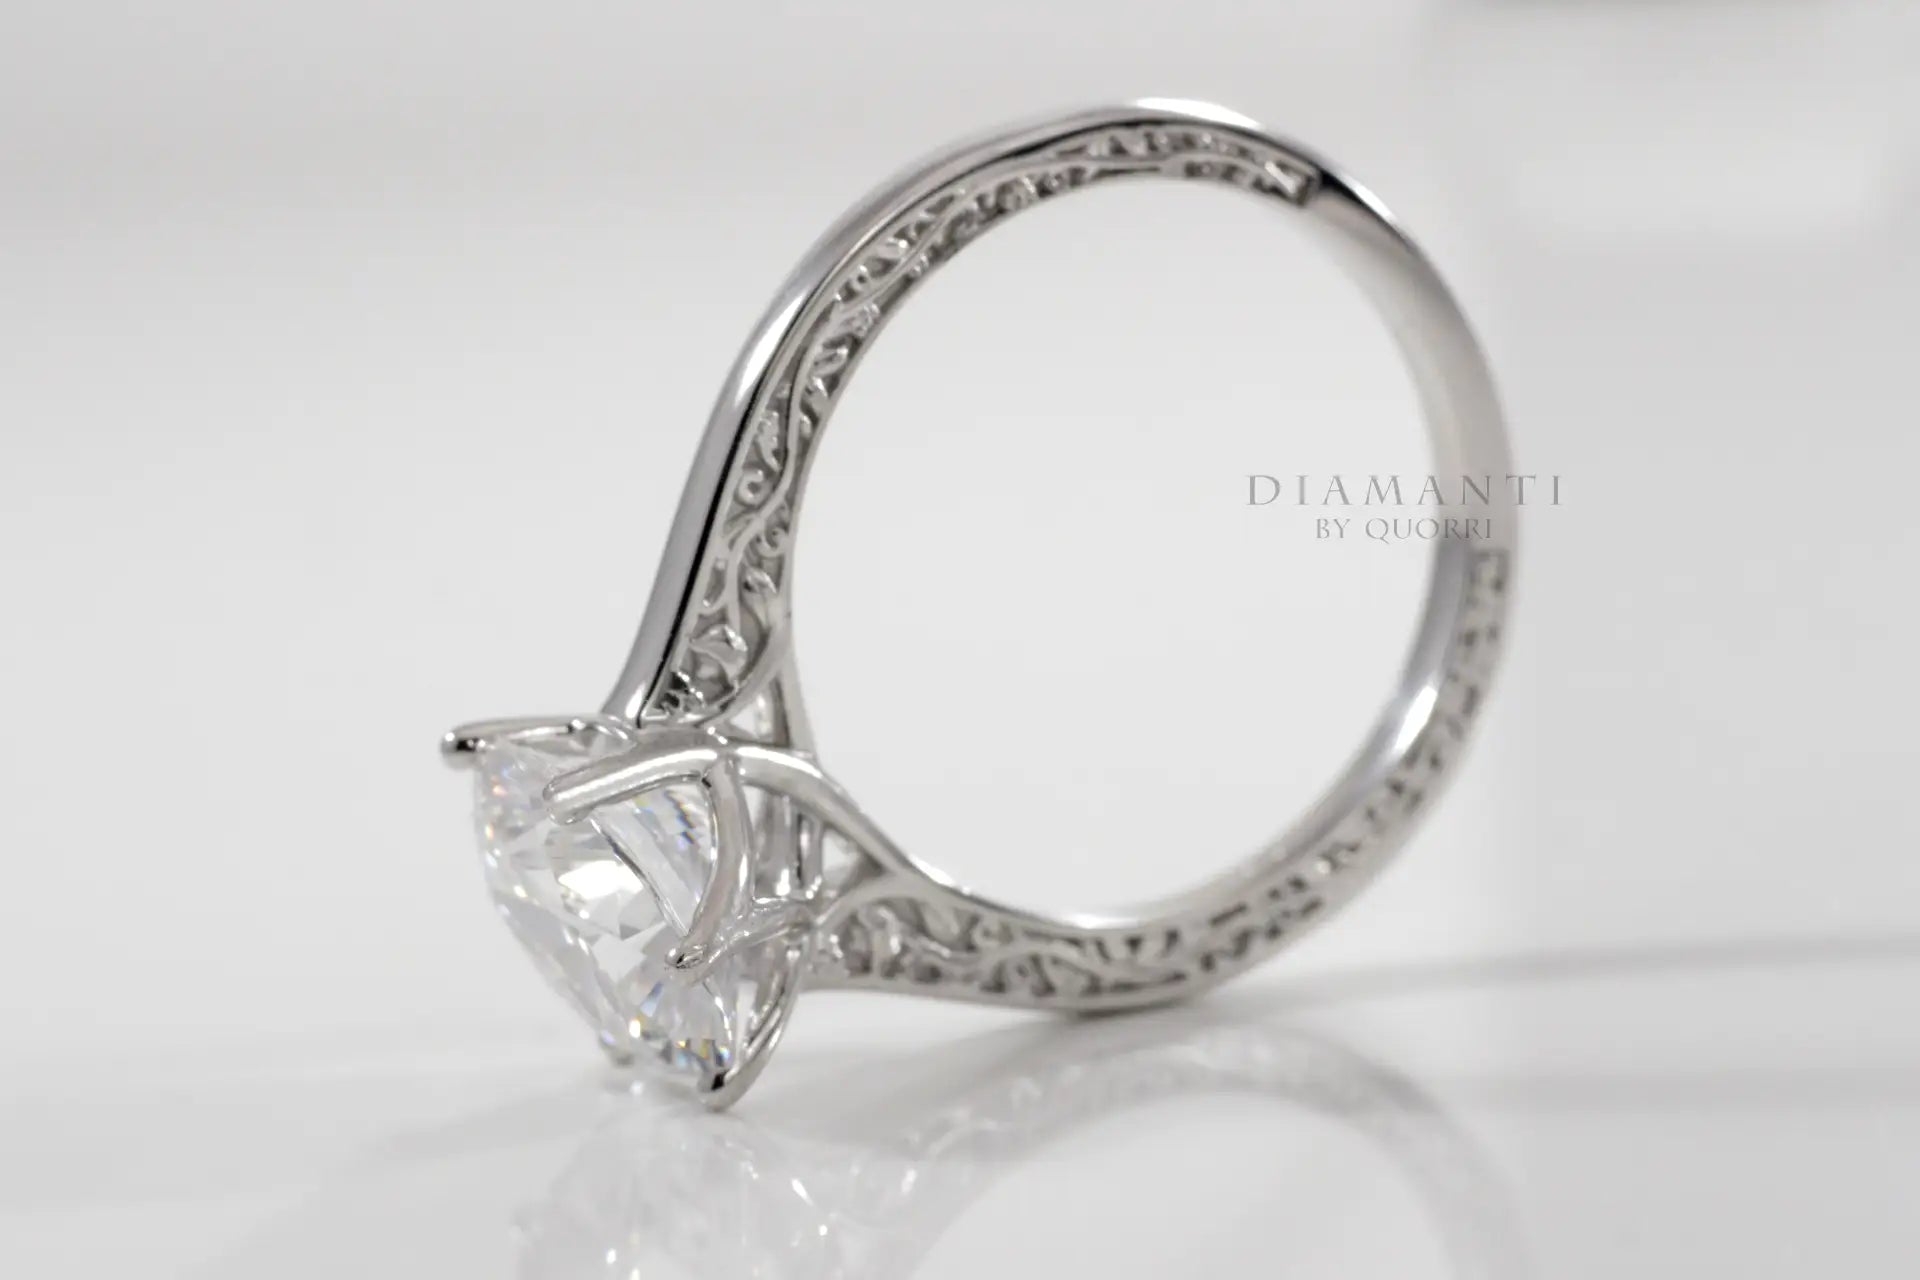 six prong rose motif round lab diamond engagement ring Quorri